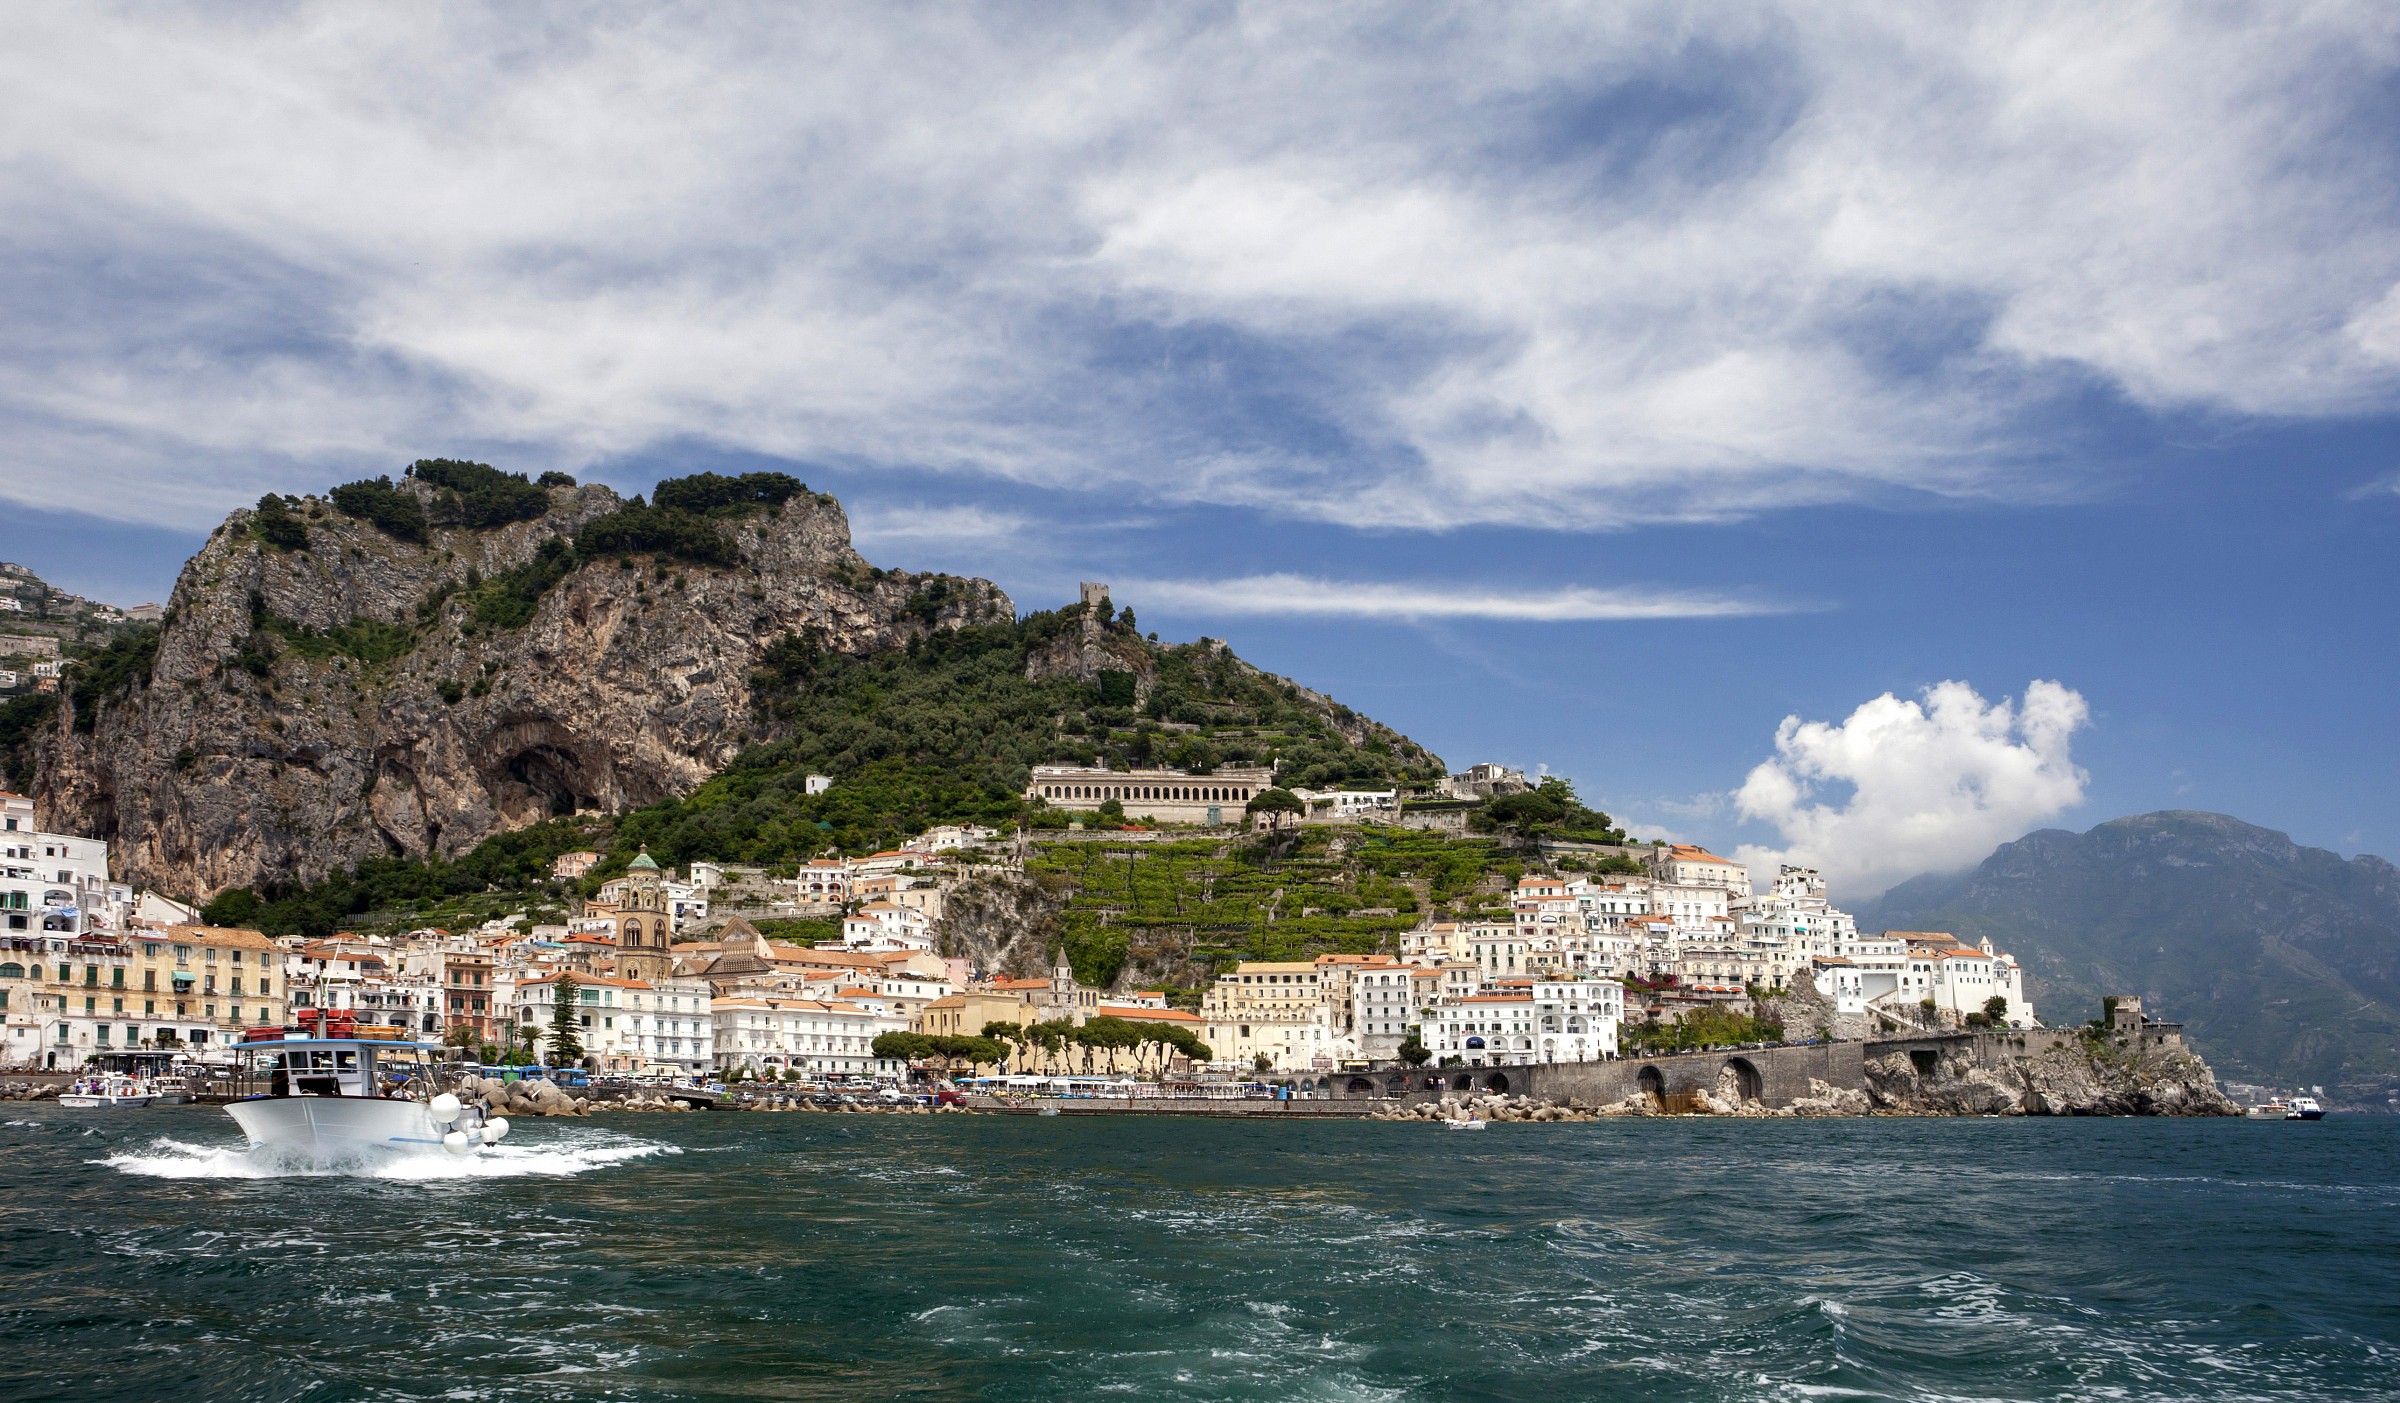 Amalfi from the sea...